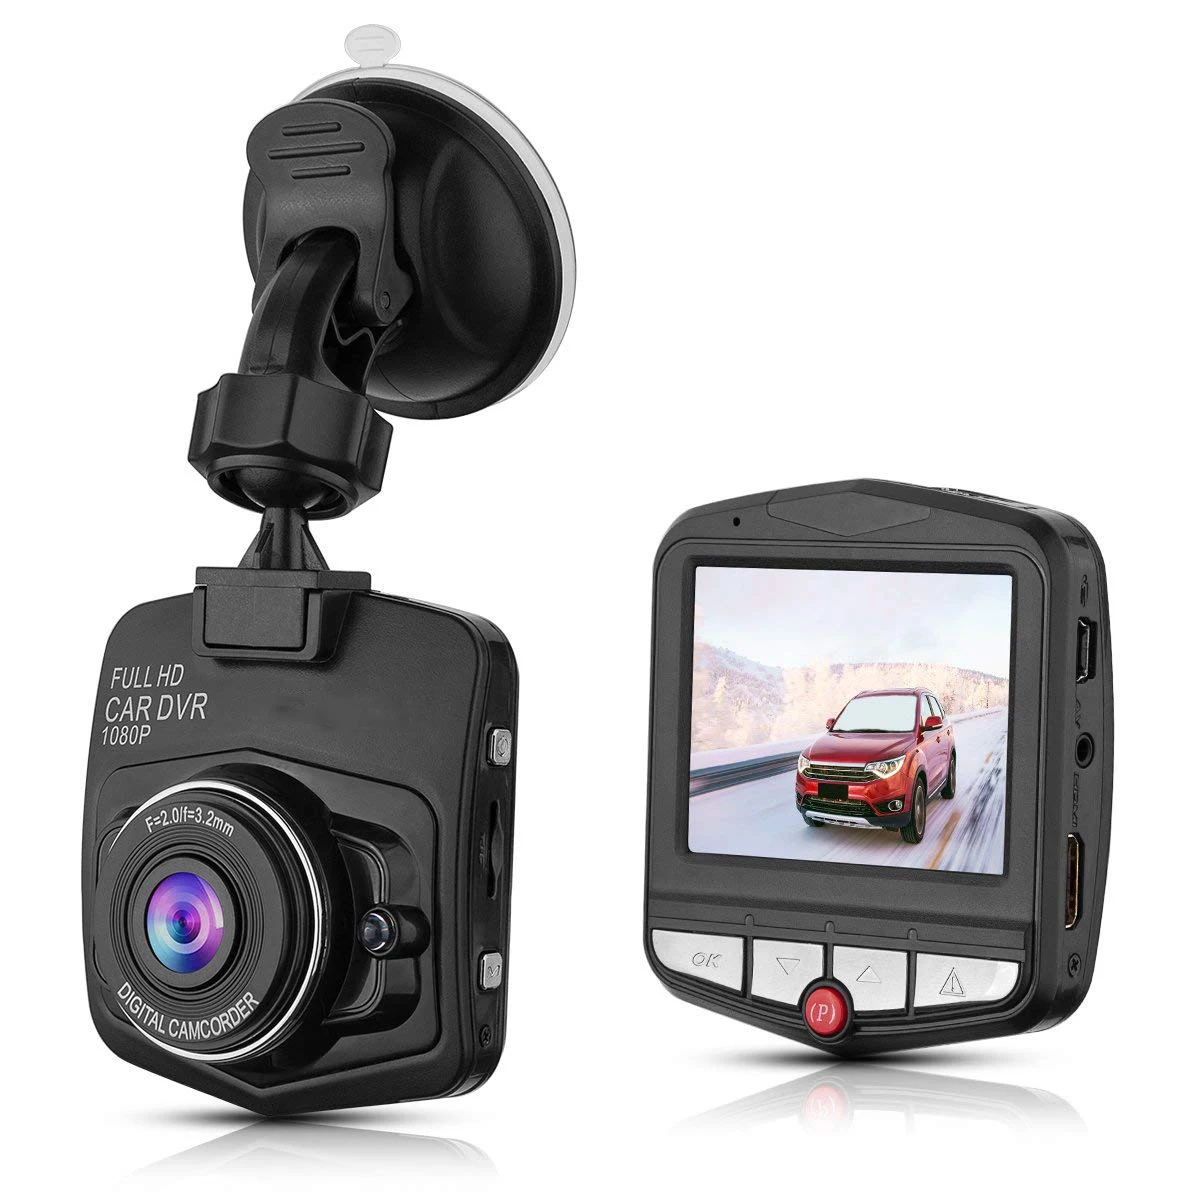 C900 Car Dvr 1080p Hd Camera Dvr Video Recorder Car Dash - Buy 1080p Car Camera Dvr Video Recorder,Car Dash Camera,C900 Car Dvr Dash Cam Product on Alibaba.com